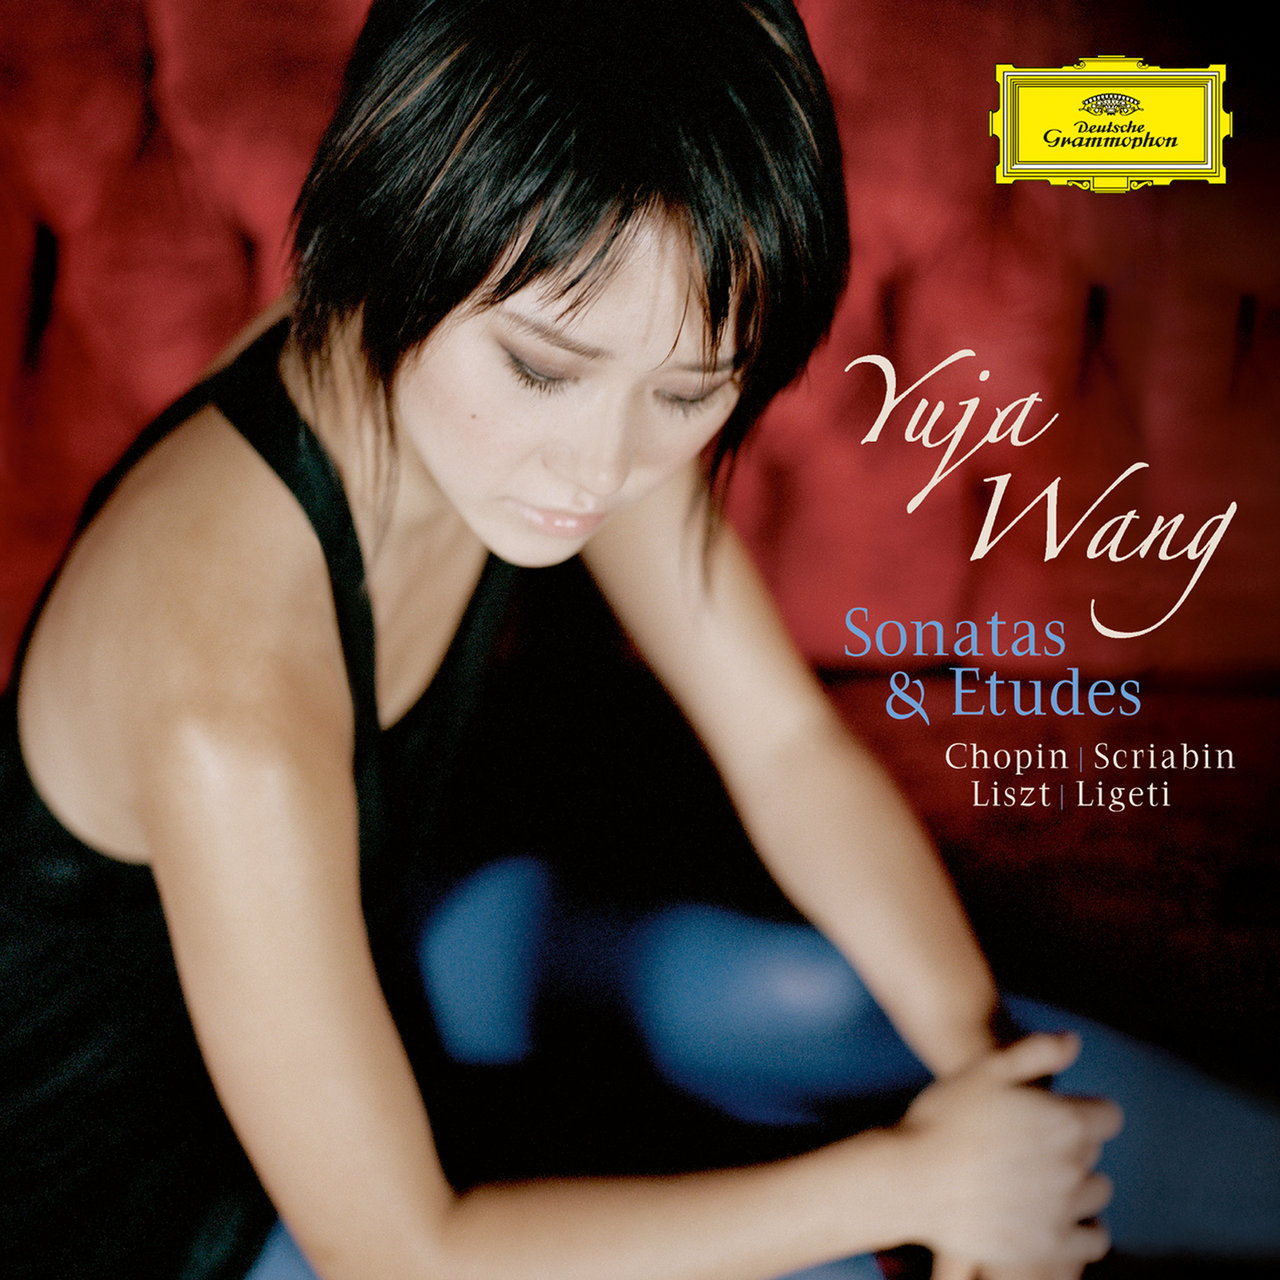 Yuja Wang - Sonatas & Etudes [2009]